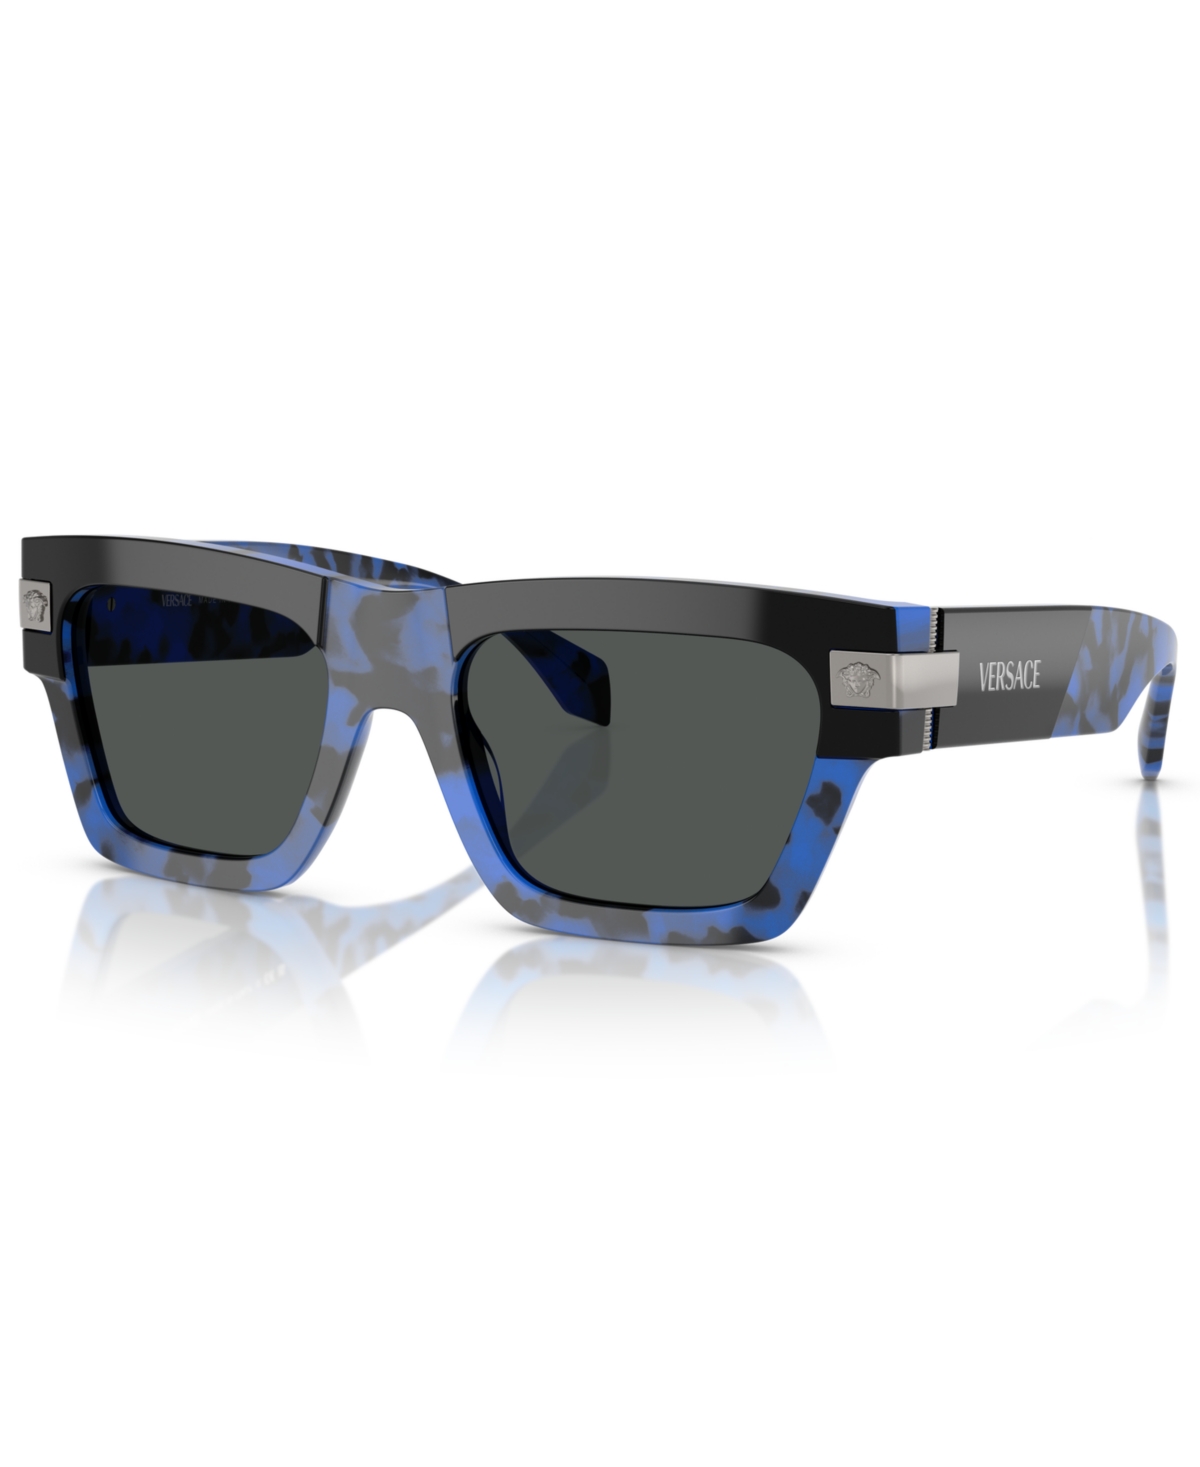 Men's Sunglasses, Ve4464 - Hava Blue